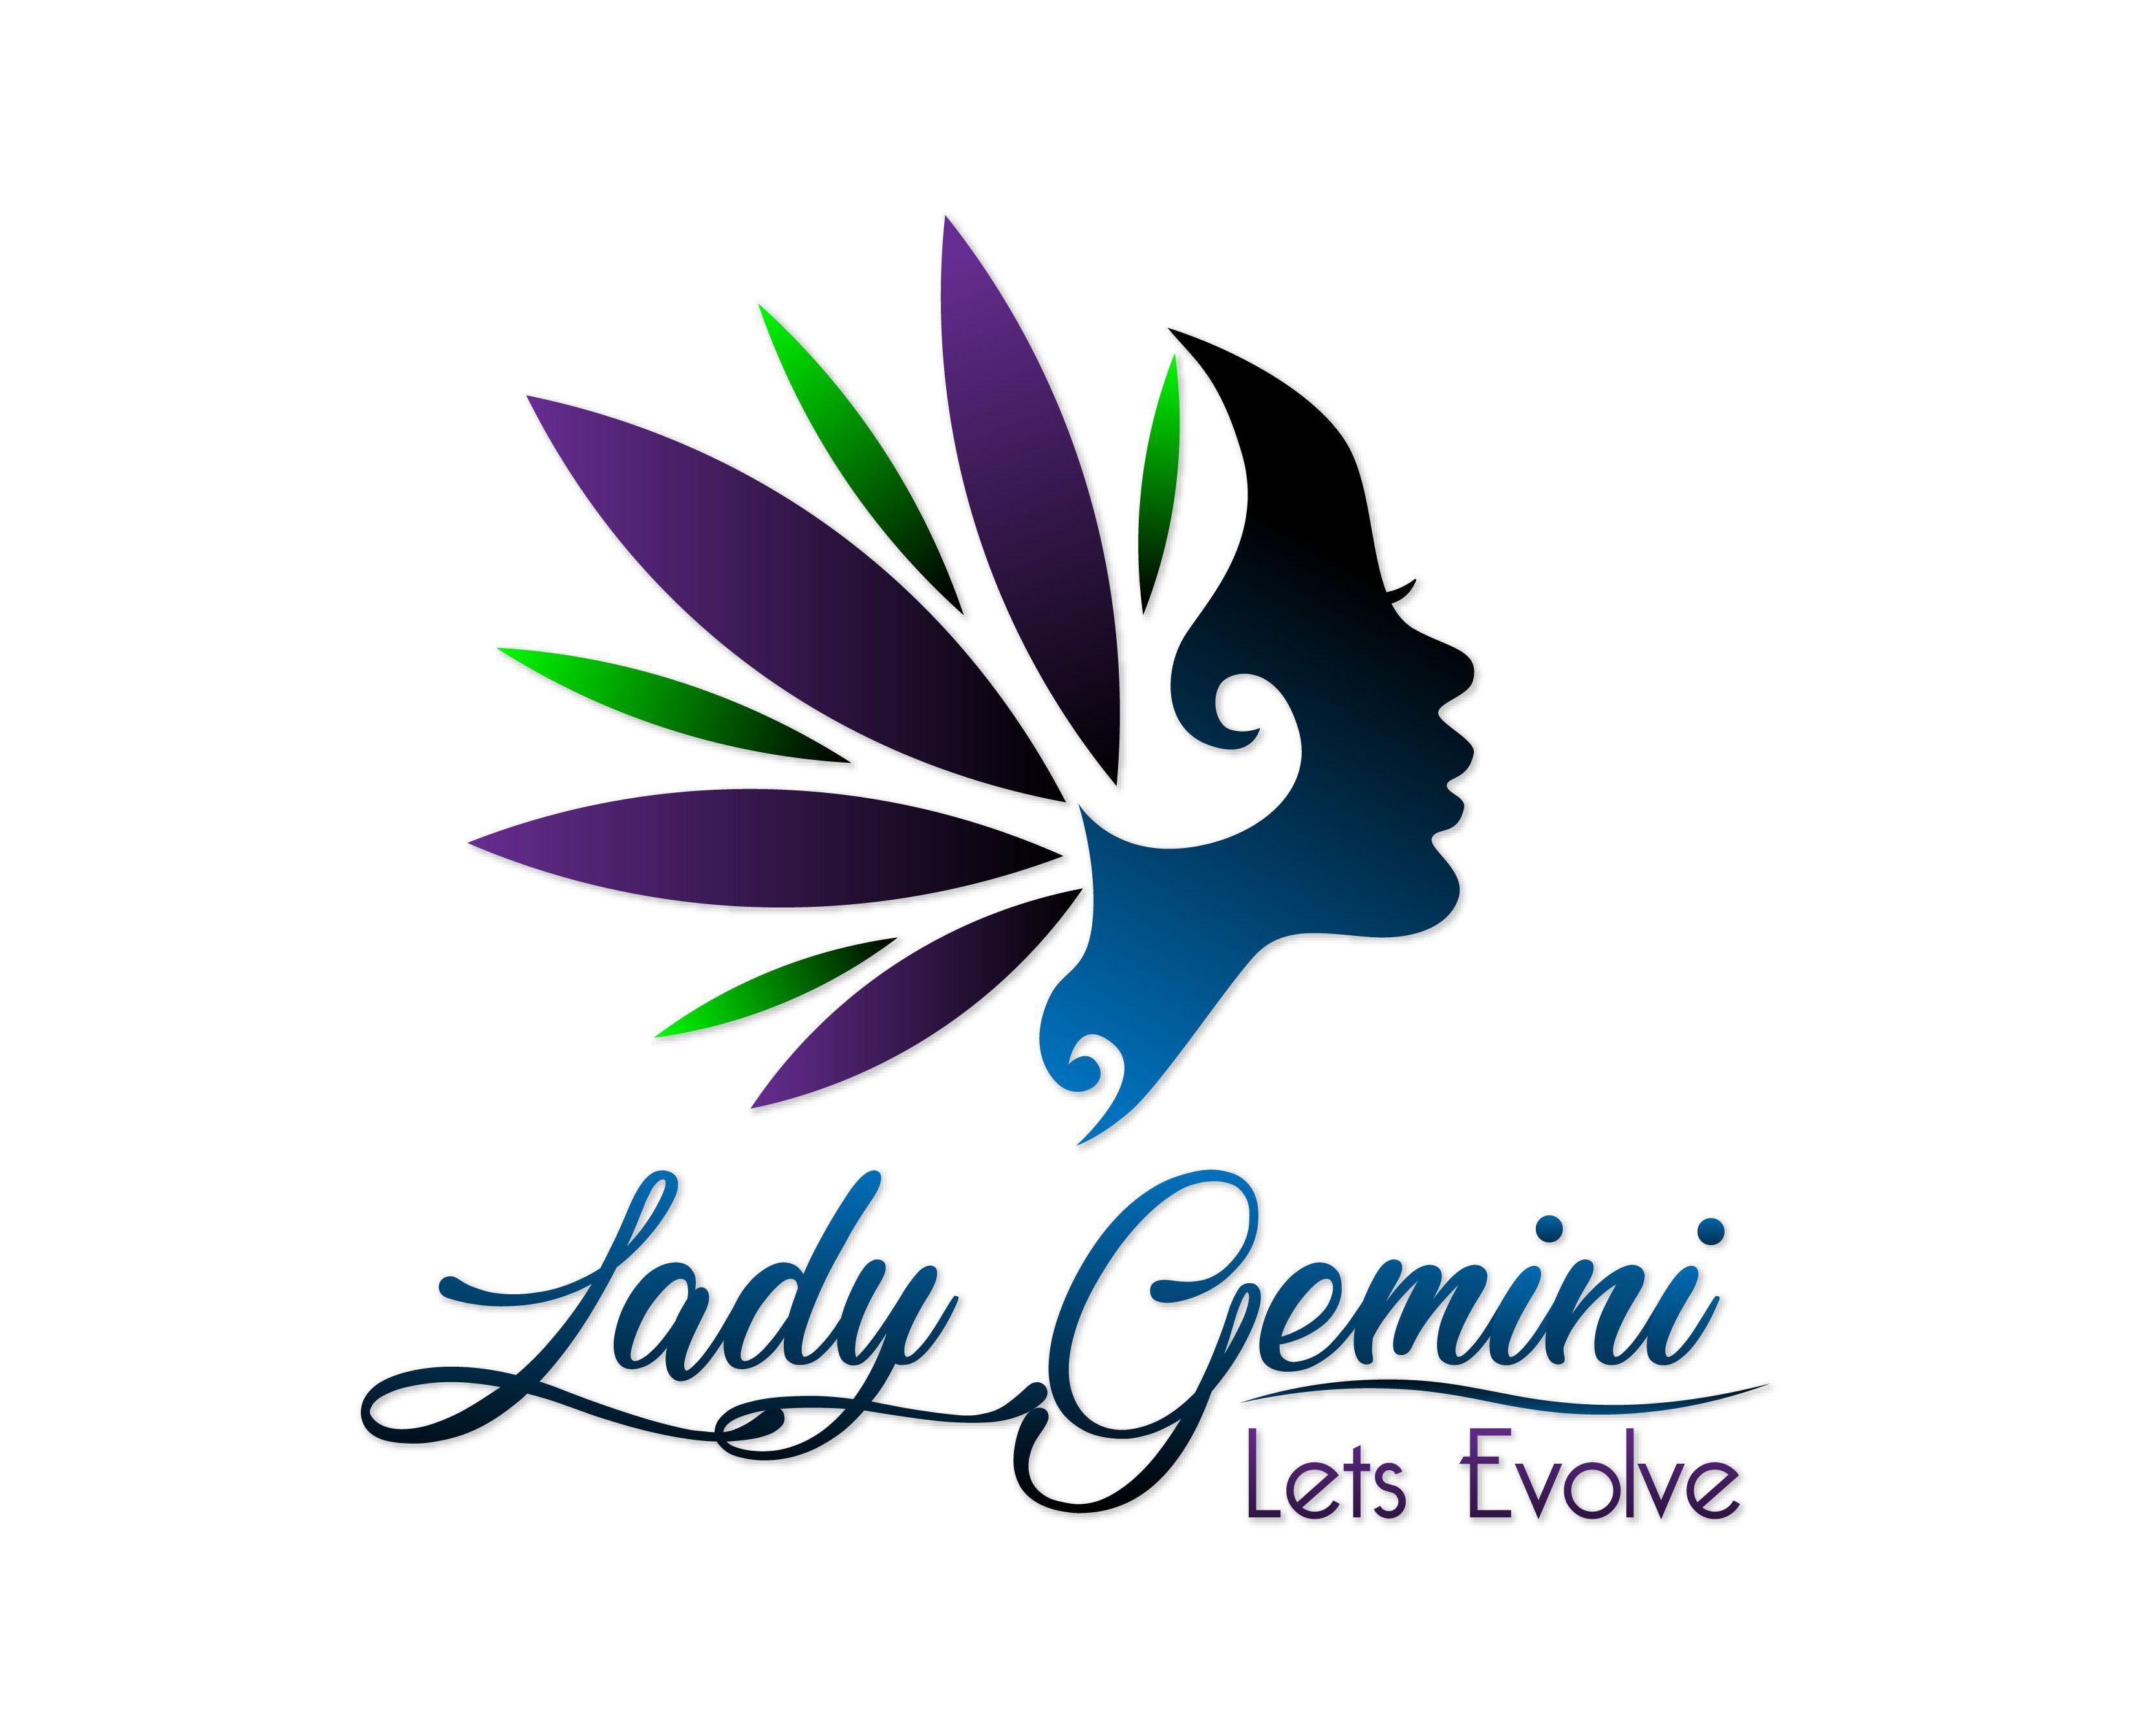 Lady Logo - Logo Design Contest for Lady Gemini | Hatchwise